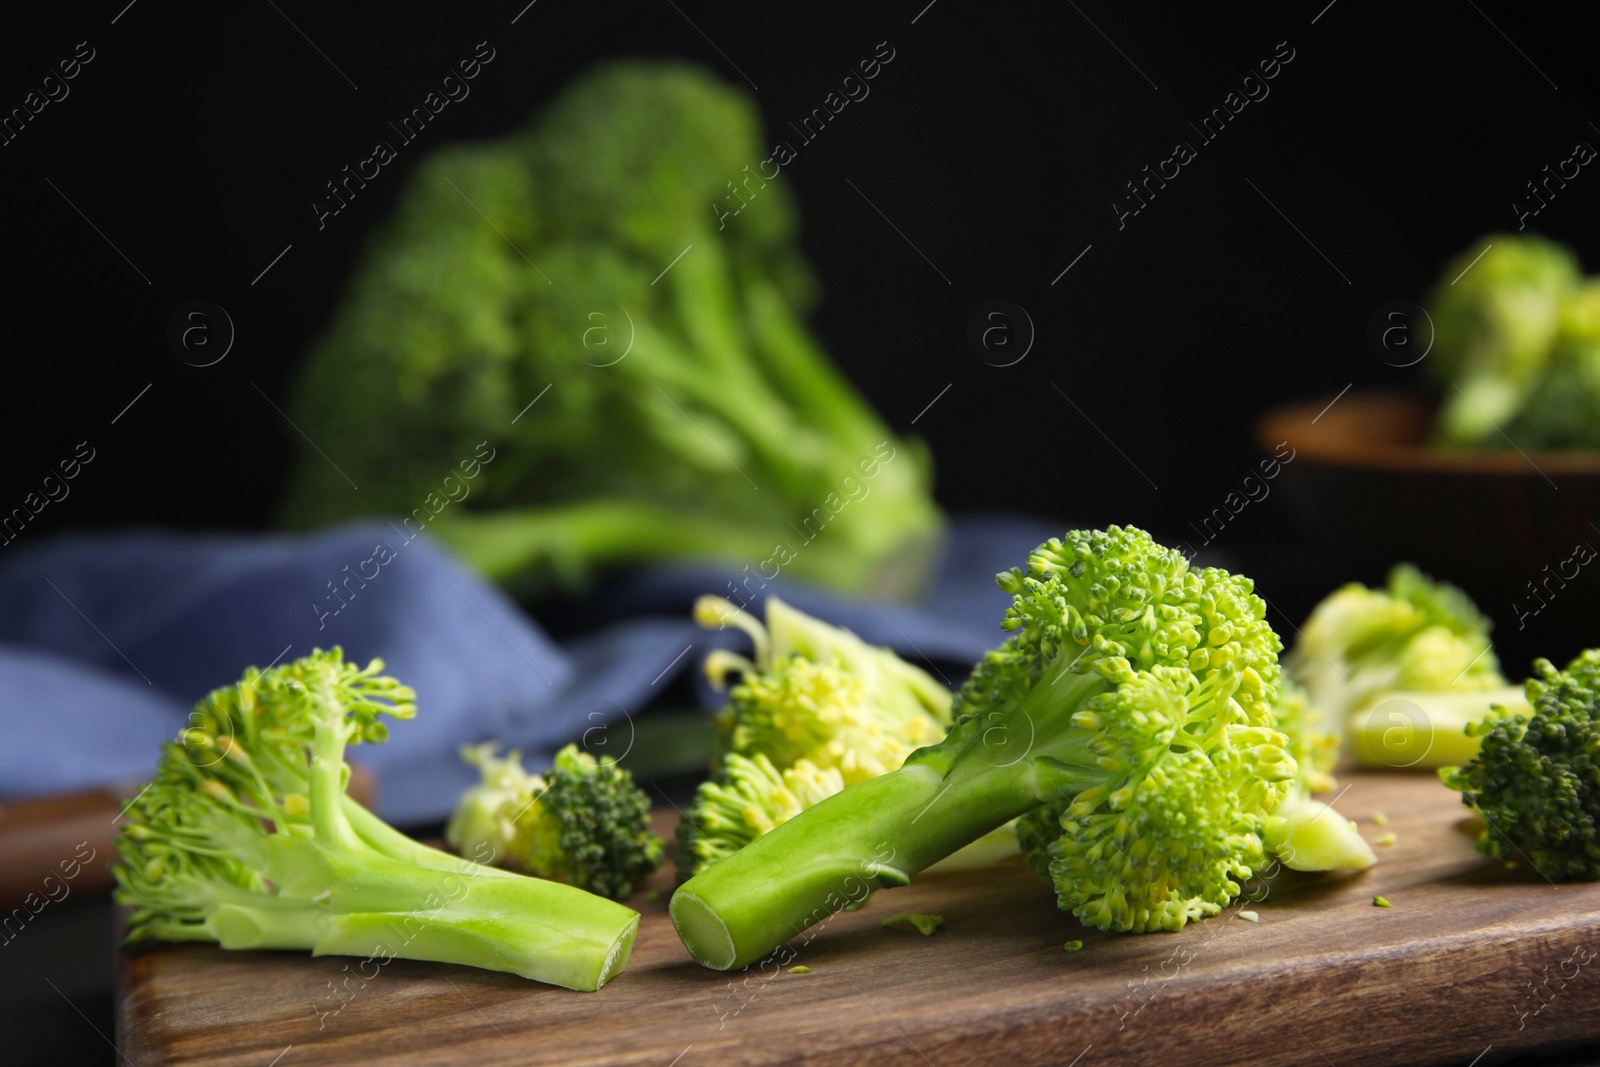 Photo of Raw green broccoli on wooden cutting board